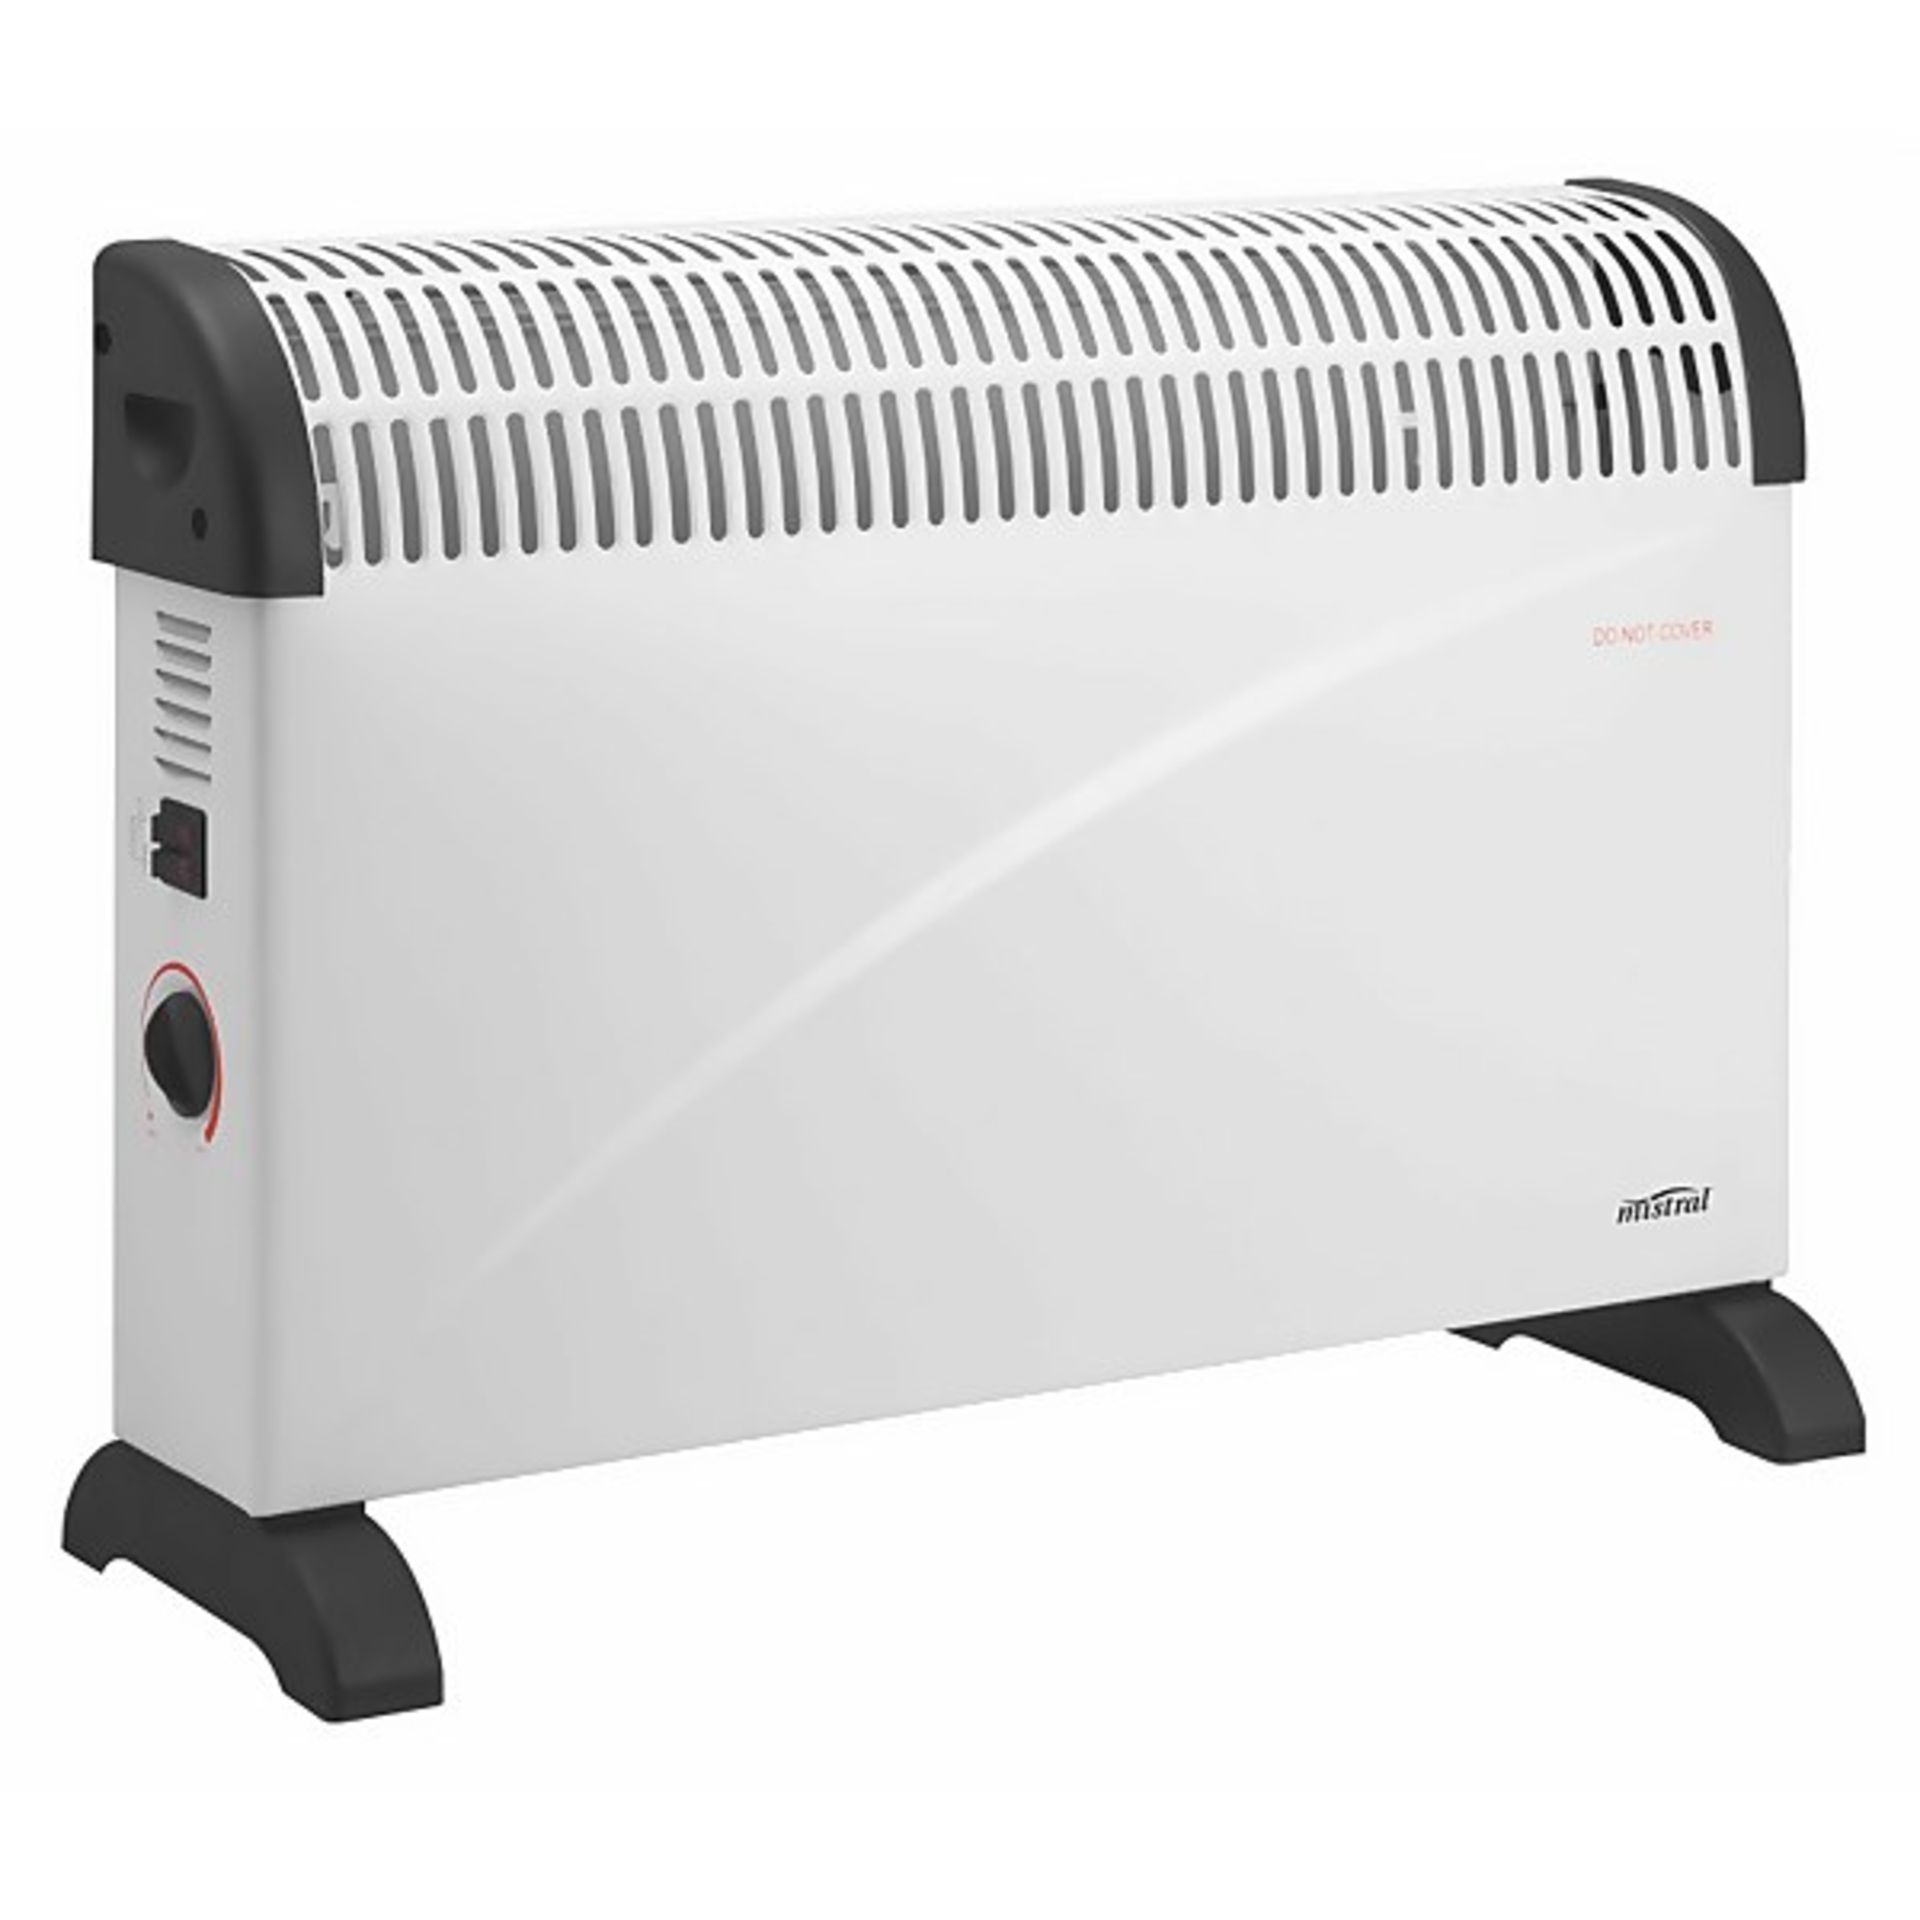 (R6P) Heating. 6 Items. 2x Stylec Oil Free Radiator 2400W (1x No Box), 2 x Arlec 2000W Ceramic He - Image 2 of 4